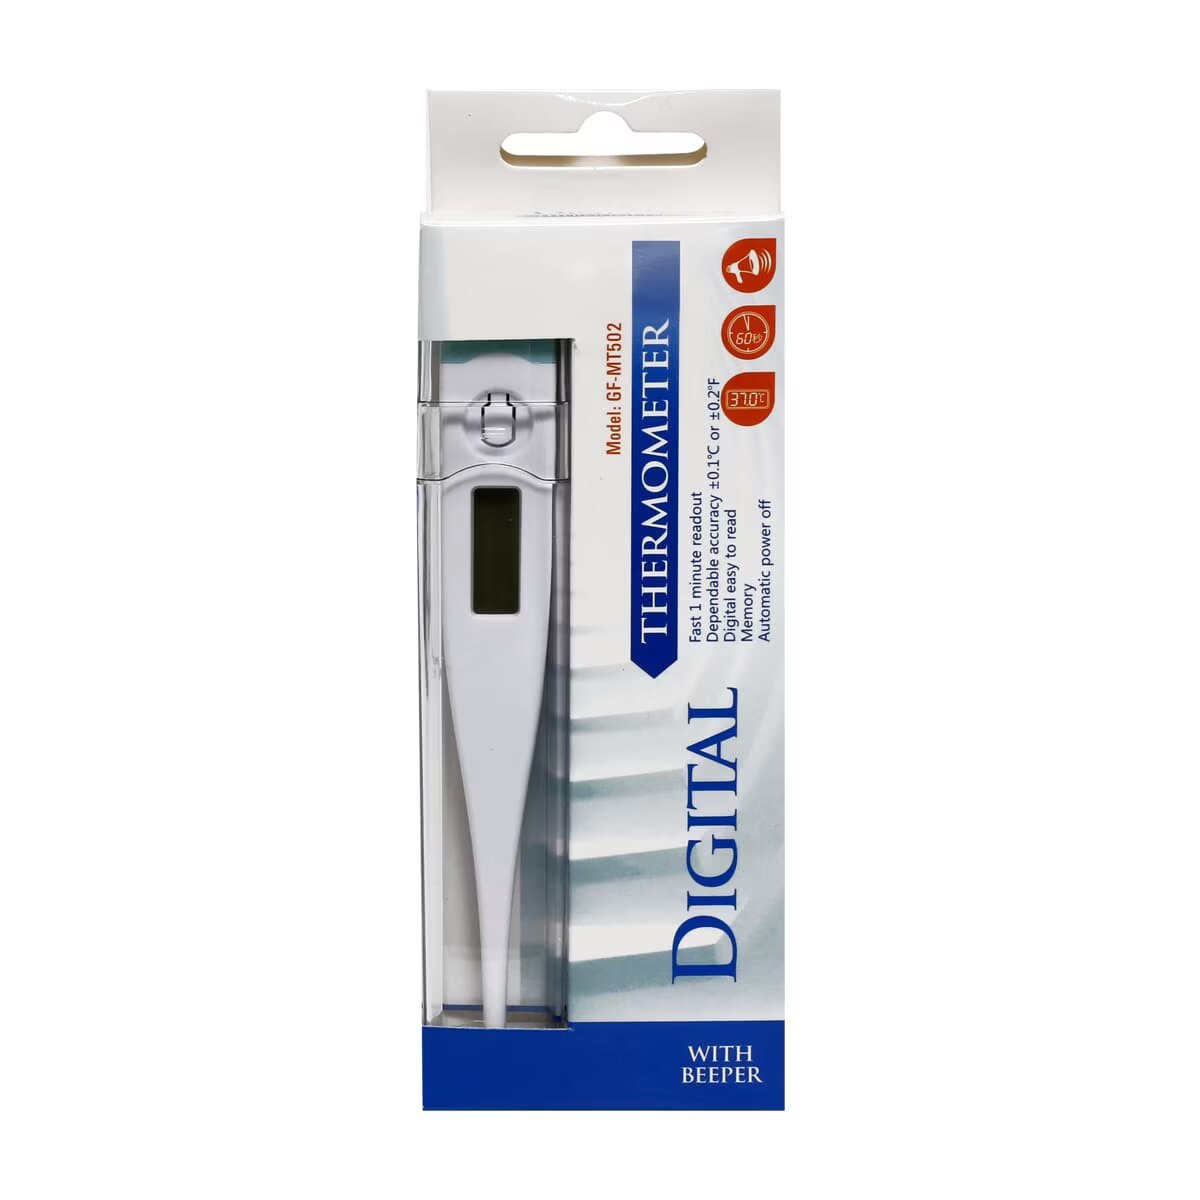 GPD Digital Thermometer